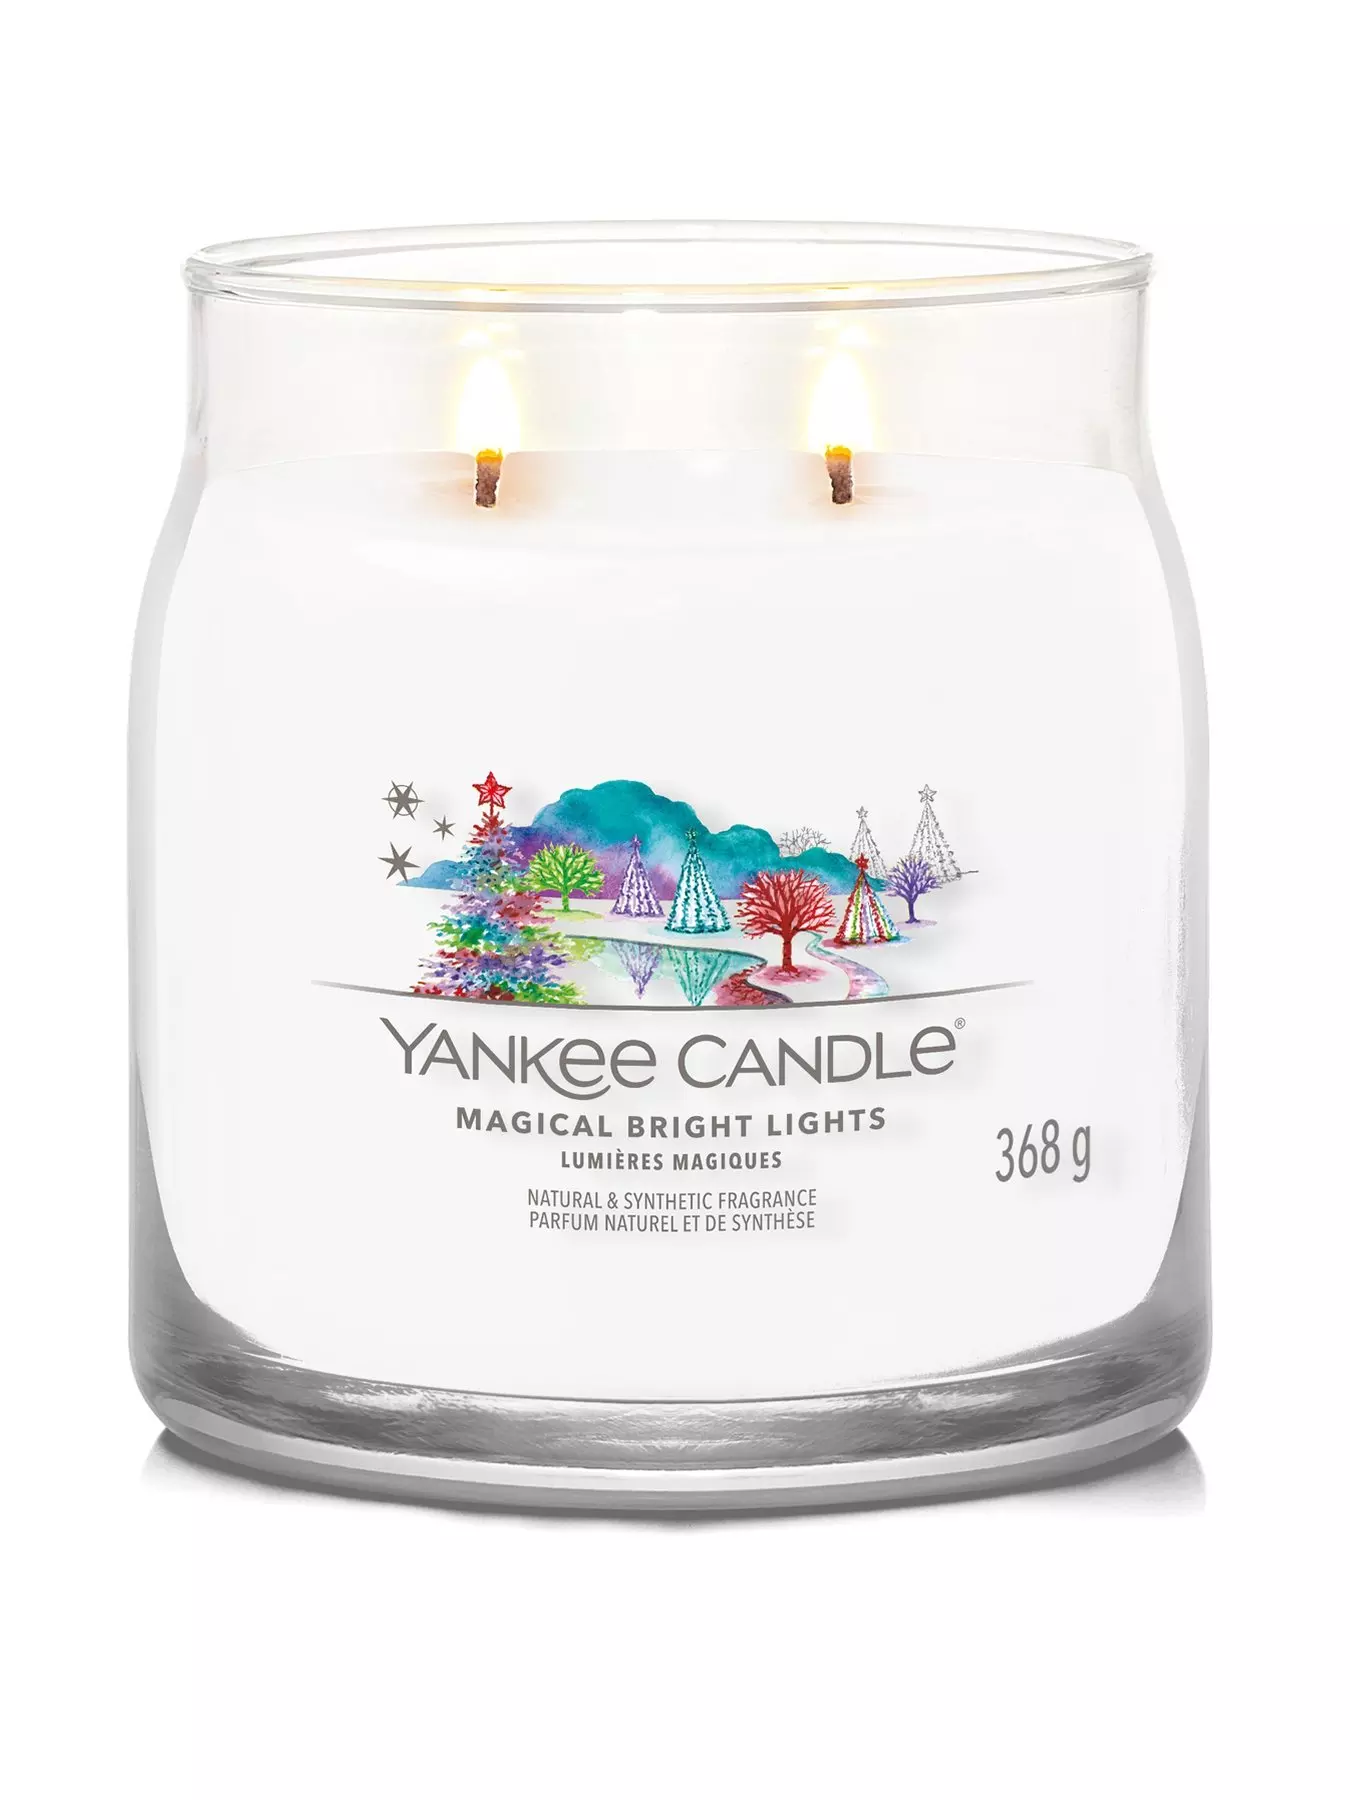 Yankee Candle Whole Home Air Freshener Balsam & Cedar - 10.5 G